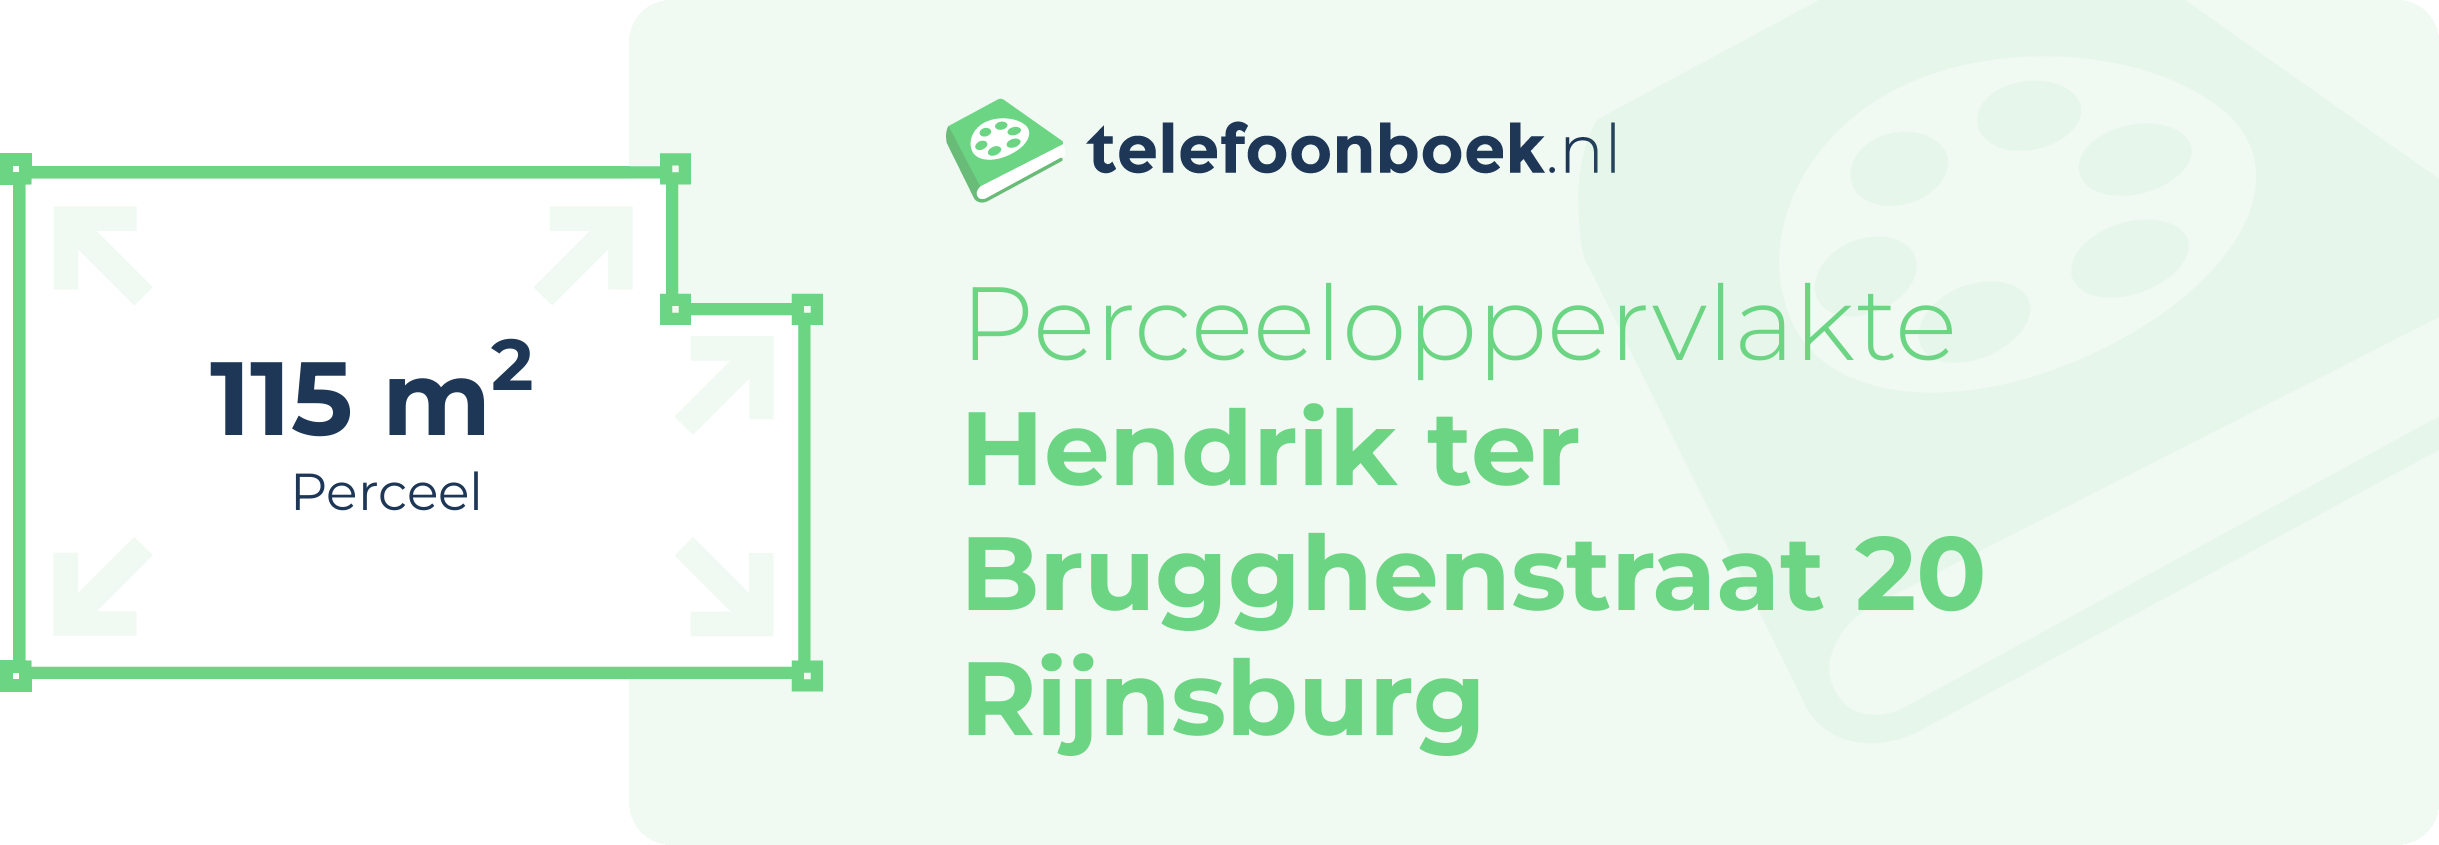 Perceeloppervlakte Hendrik Ter Brugghenstraat 20 Rijnsburg